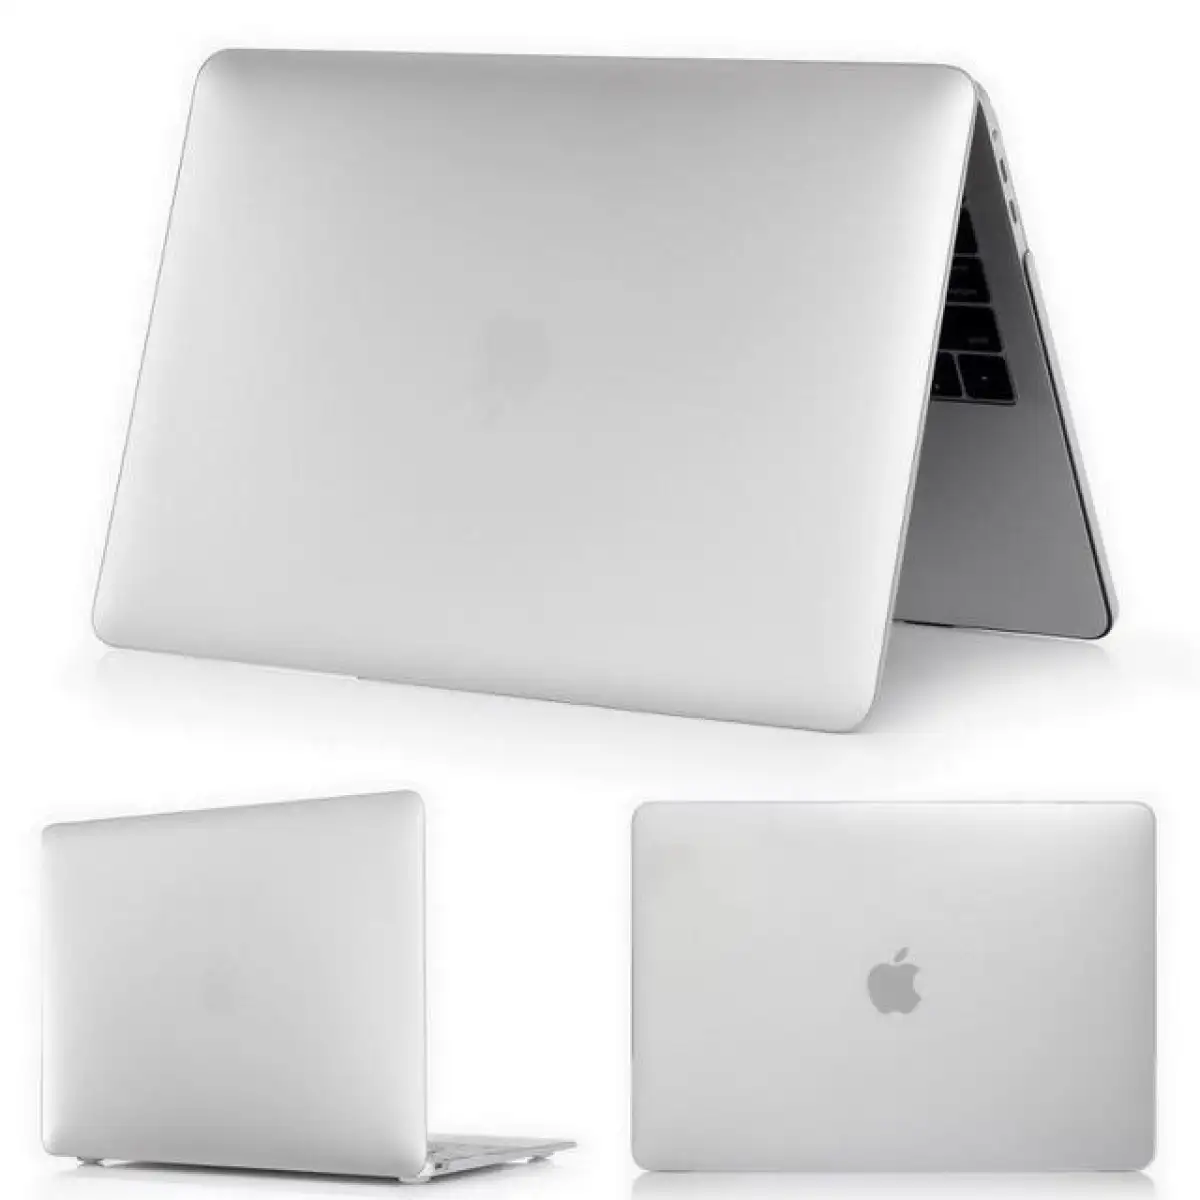 Crystal-Matte-Case-For-Apple-Macbook-Air-Pro-Retina-11-12-13-15-inch-laptop-bag.jpg_640x640.jpg